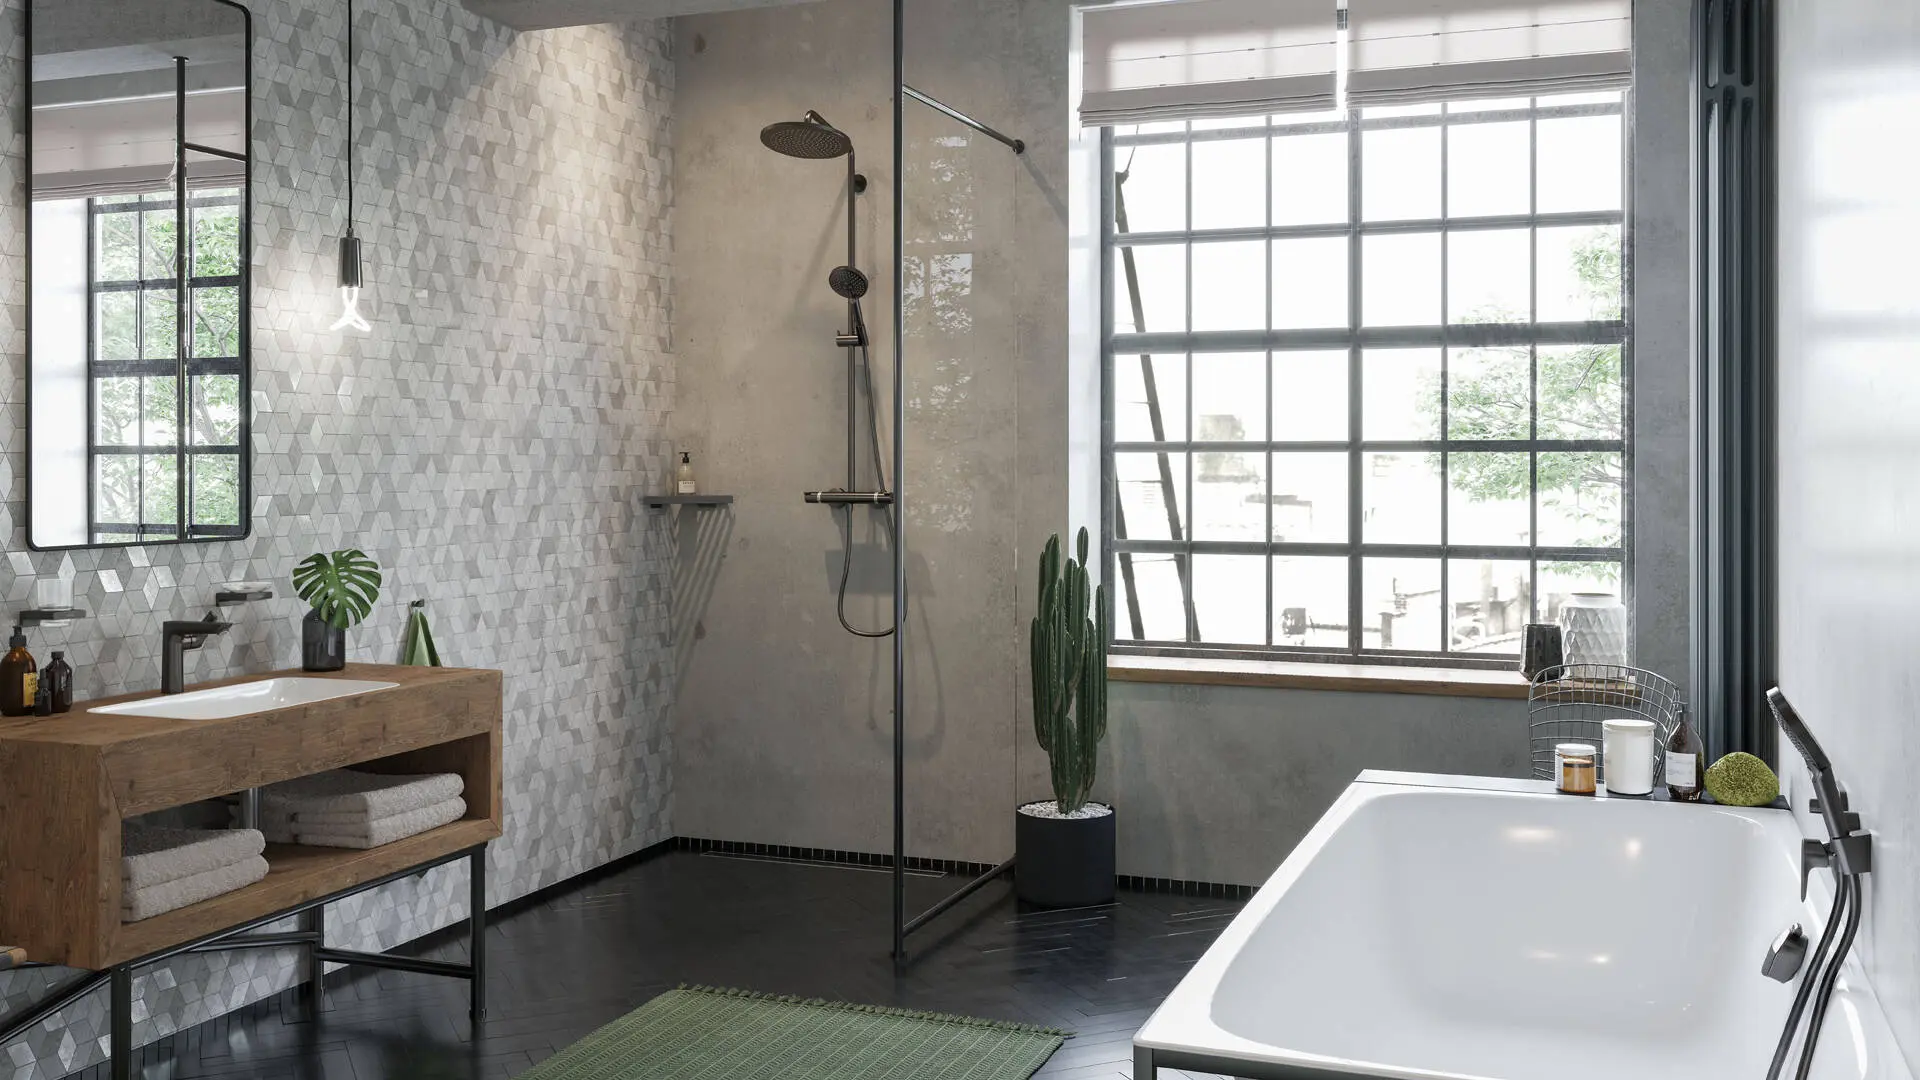 smoked glass quadrant shower enclosure - Are offset quadrant showers any good